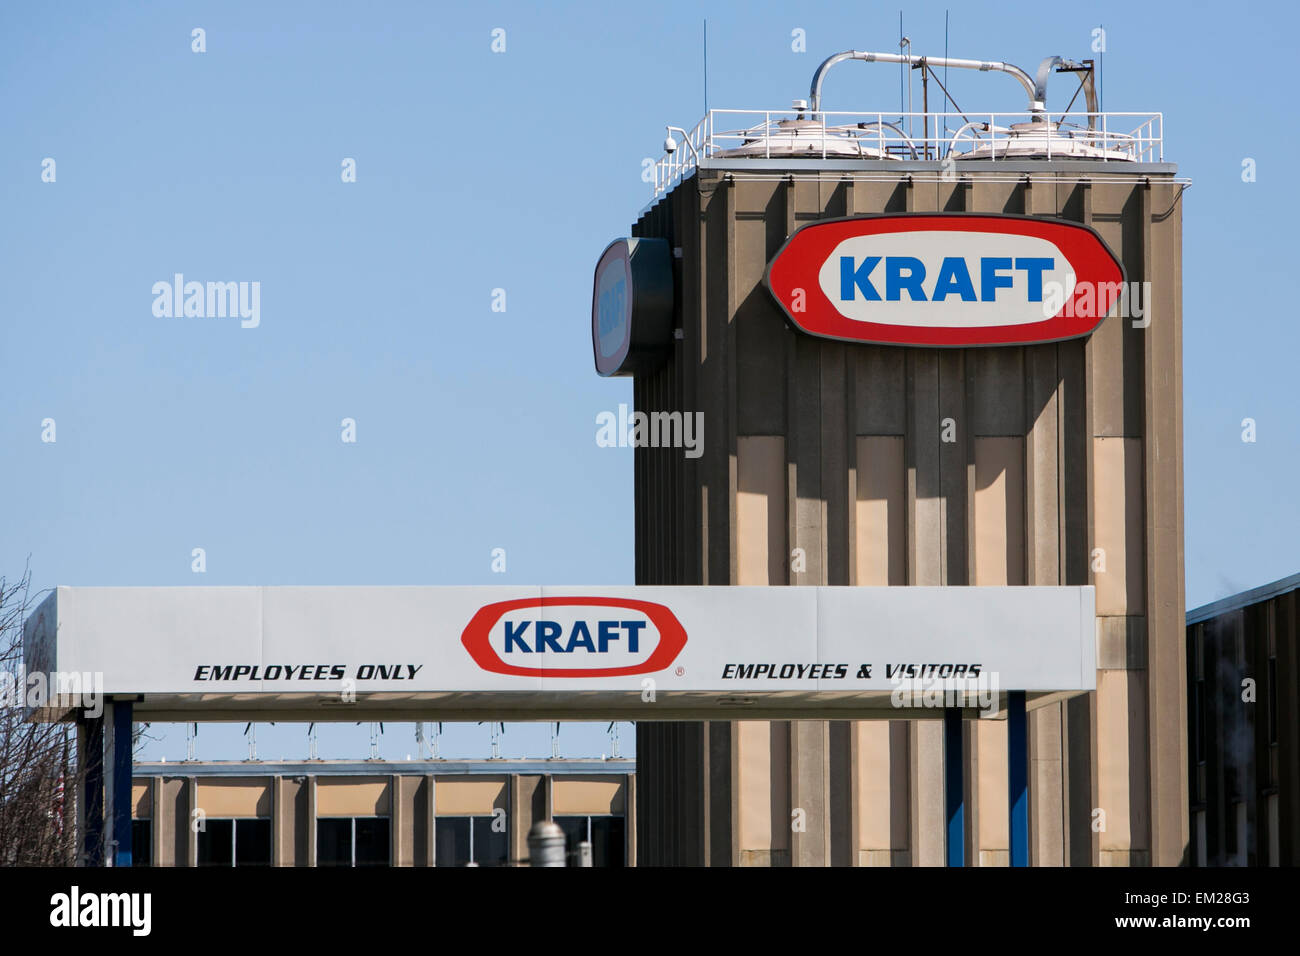 Kraft Foods Company Stock Photos & Kraft Foods Company Stock Images - Alamy1300 x 956